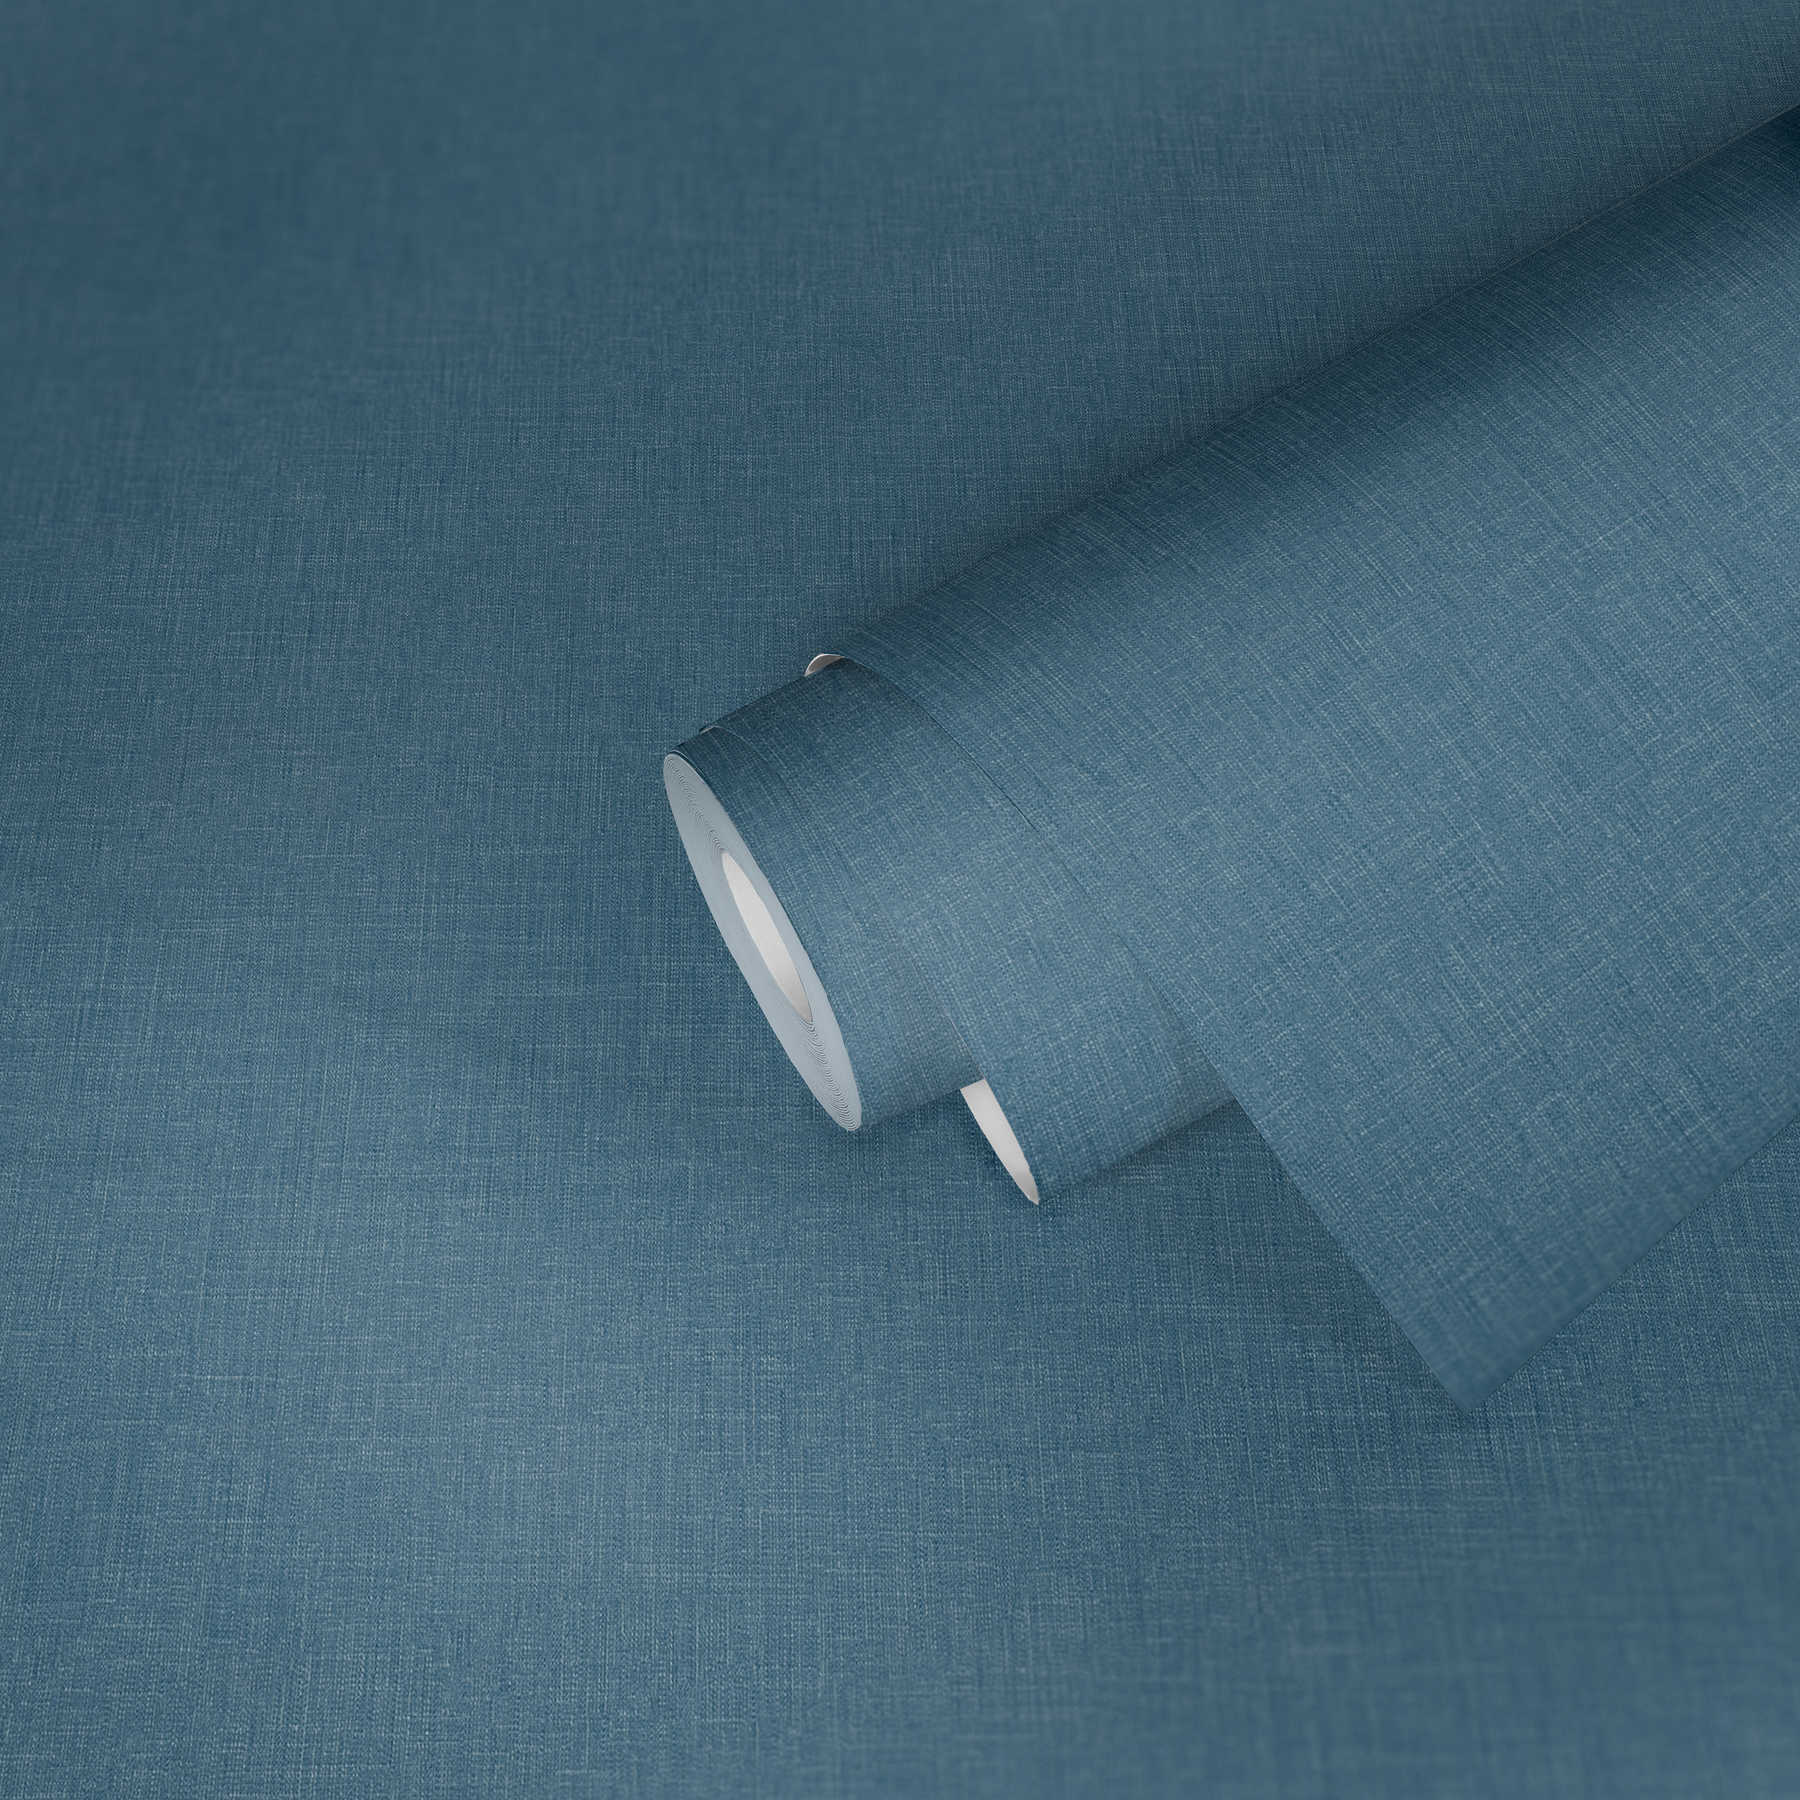             Petrol Blaue Tapete meliertes Textildesign im Scandi Look
        